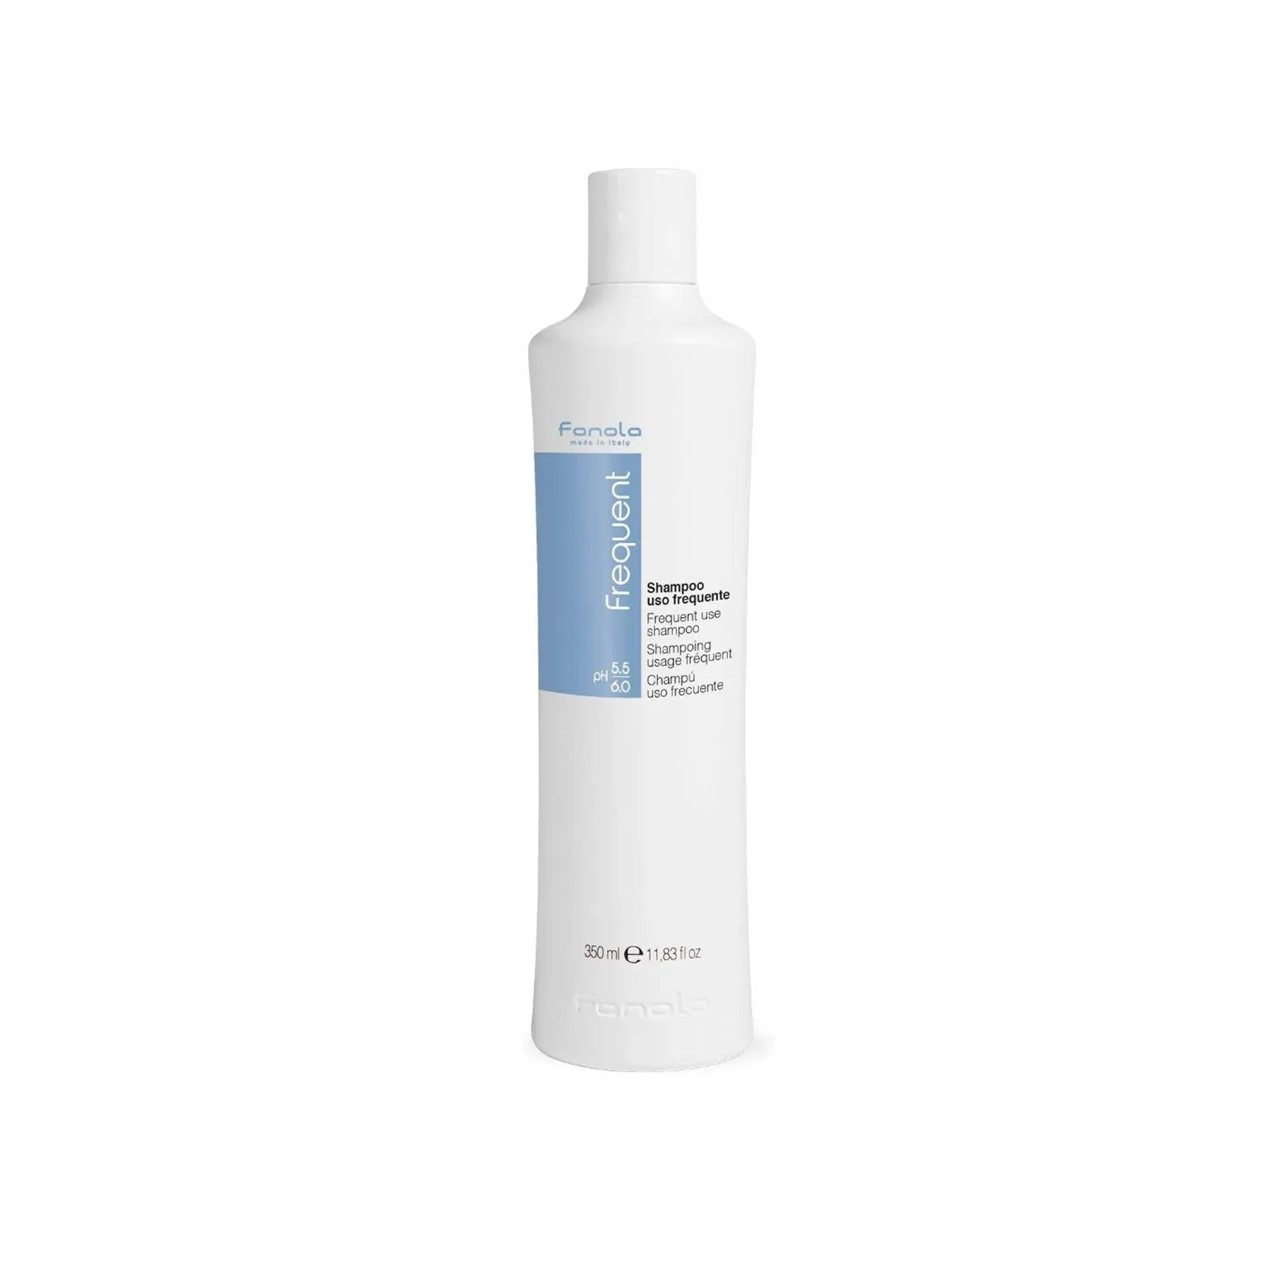 Fanola Frequent Use Shampoo 350ml (11.83 fl oz)